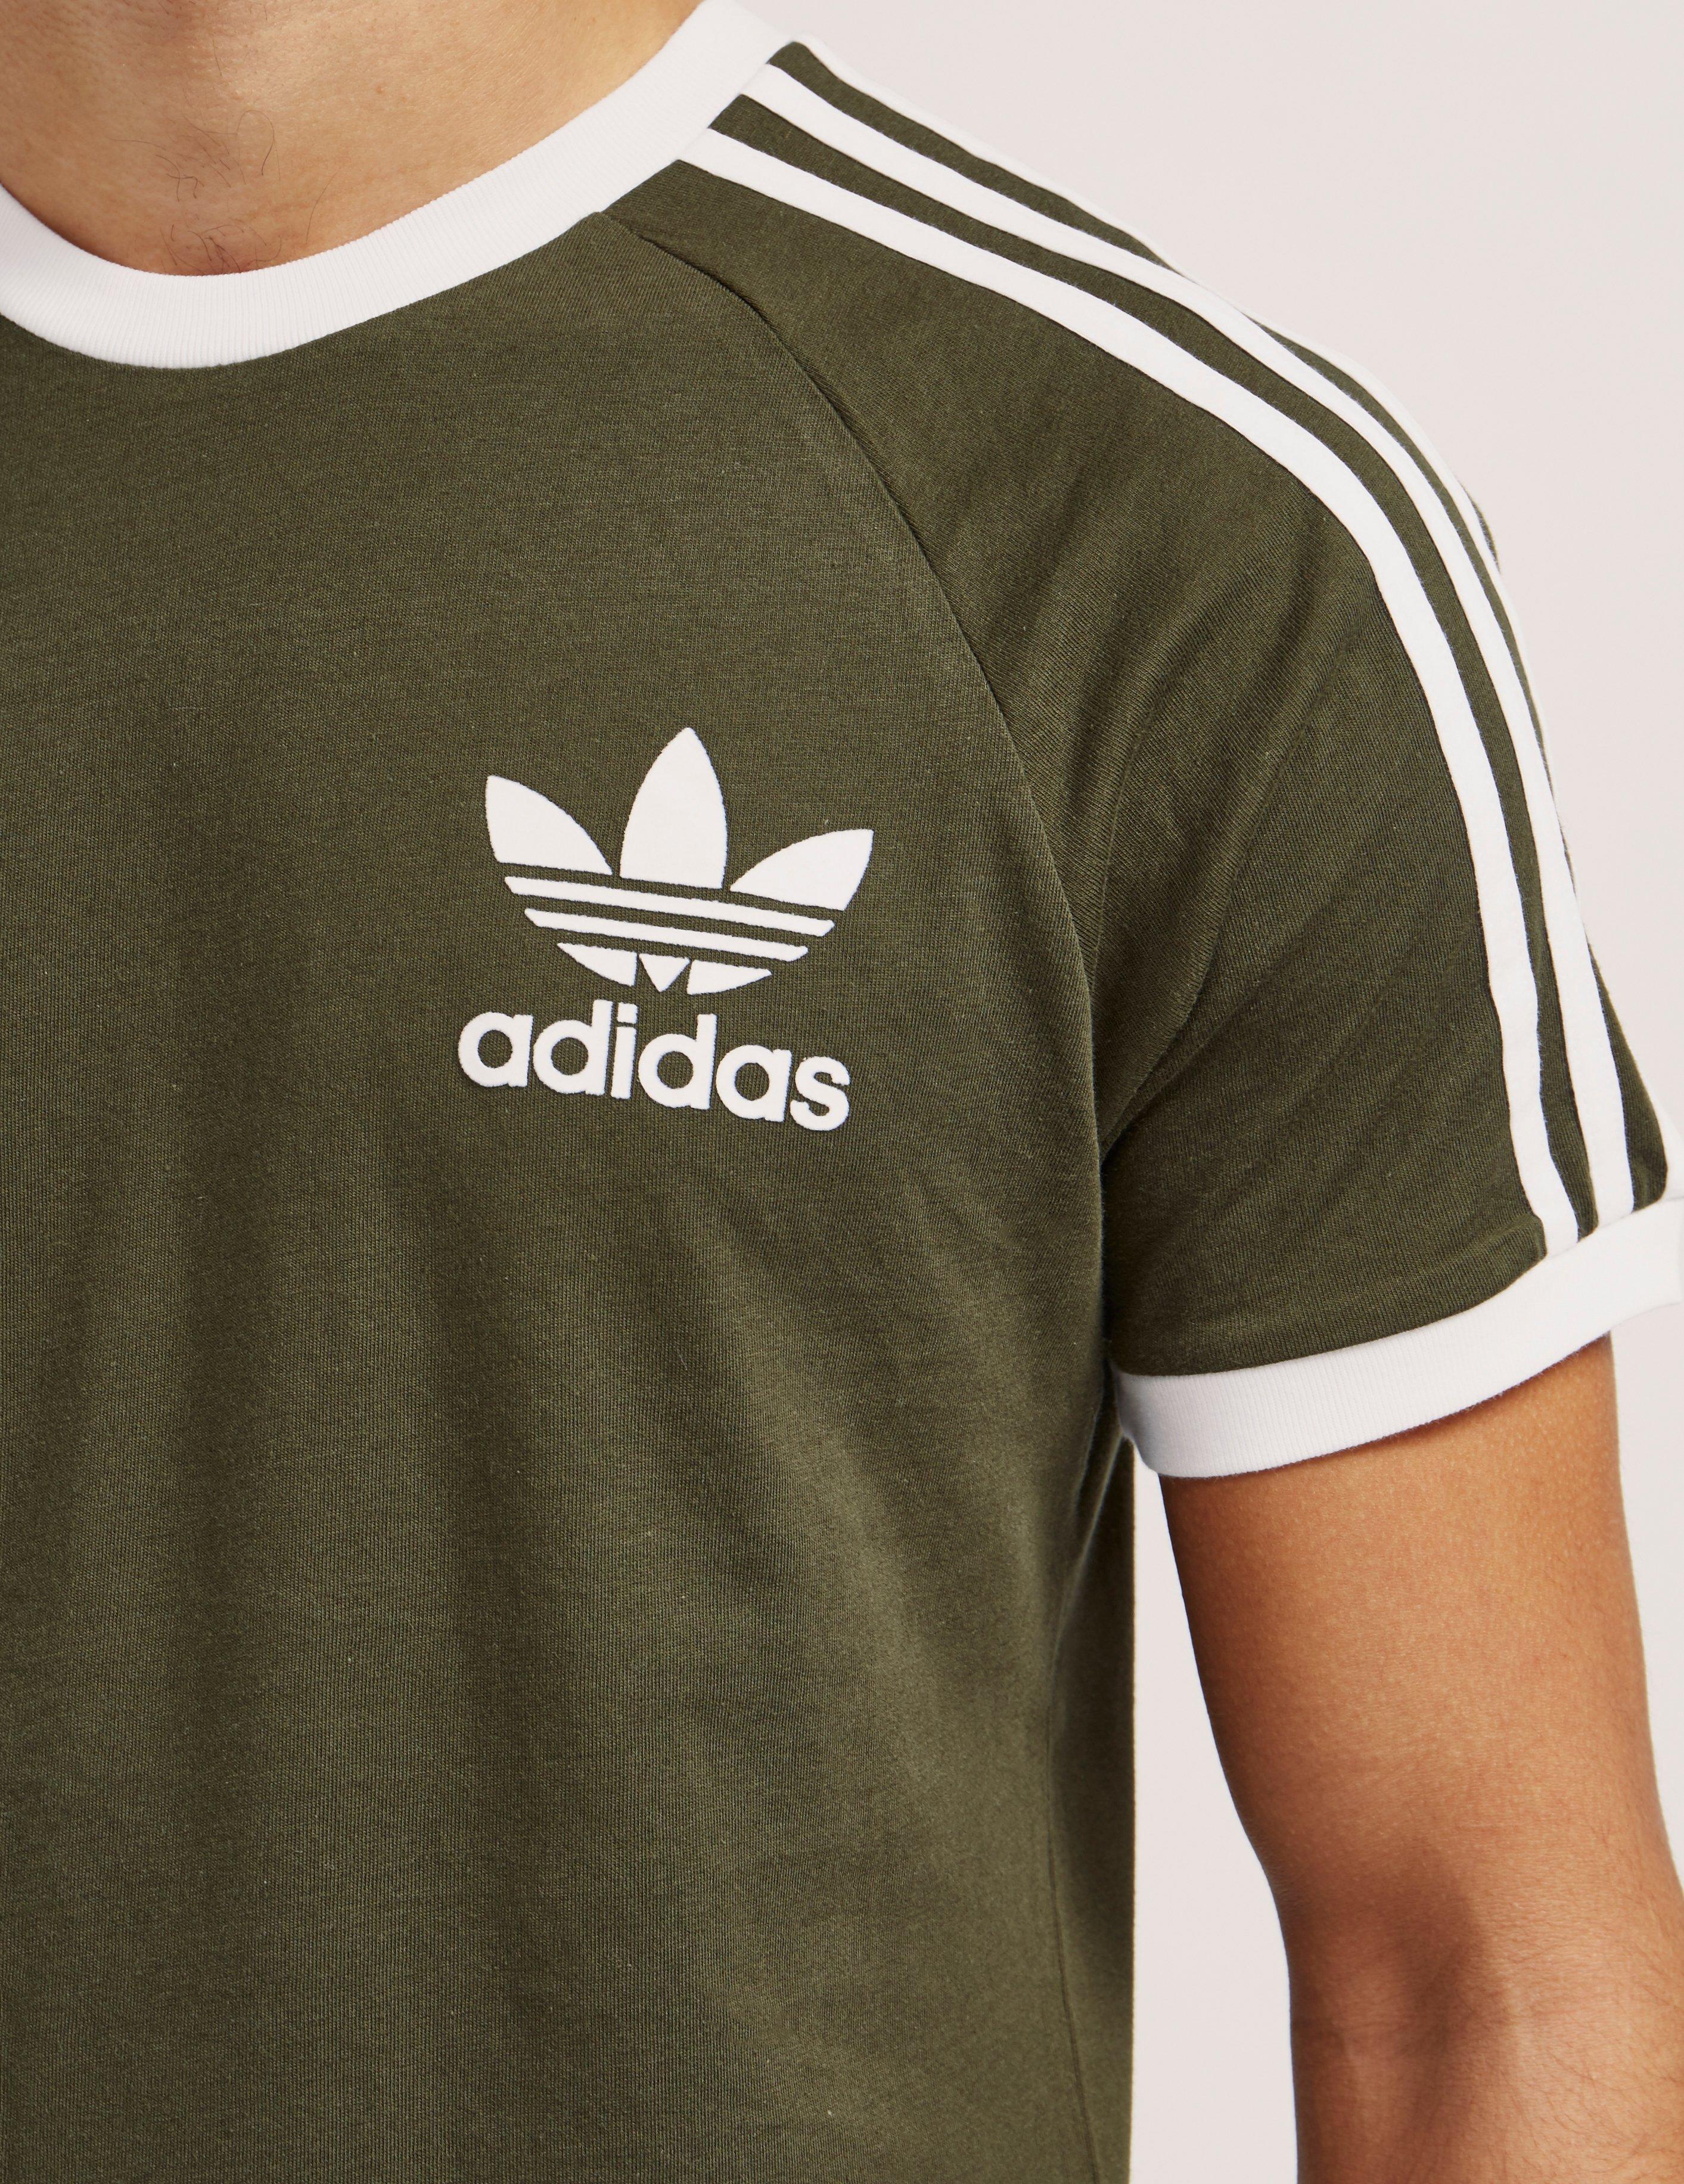 adidas Originals Cotton California Short Sleeve T-shirt in Green for